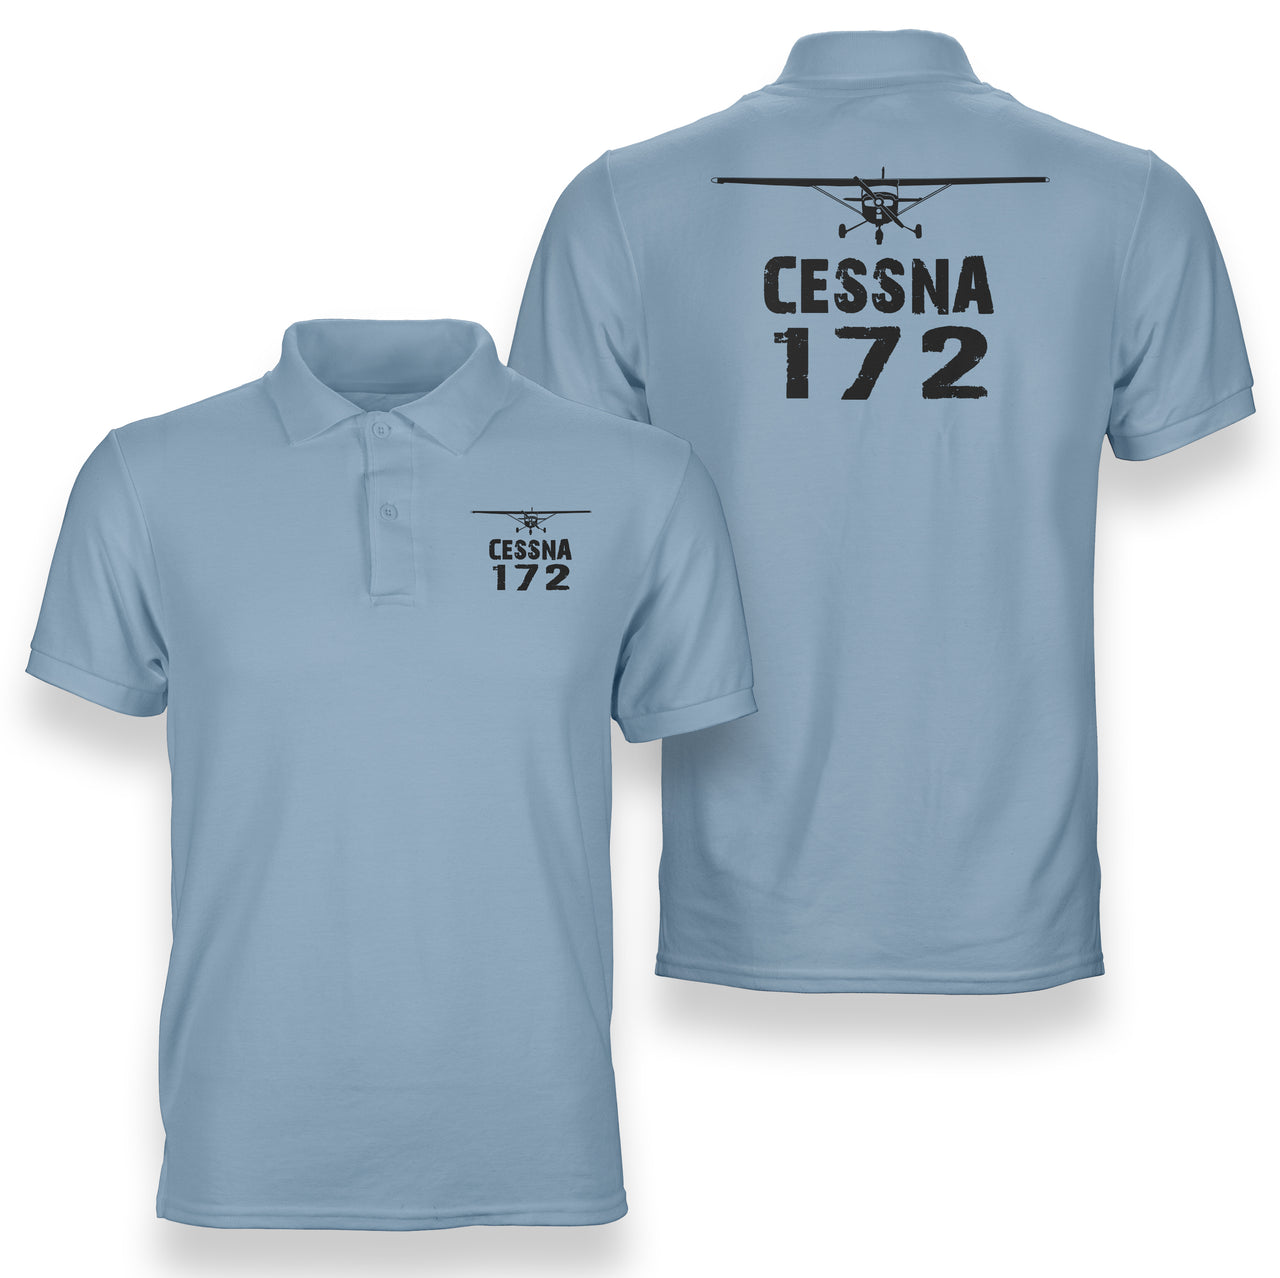 Cessna 172 & Plane Designed Double Side Polo T-Shirts